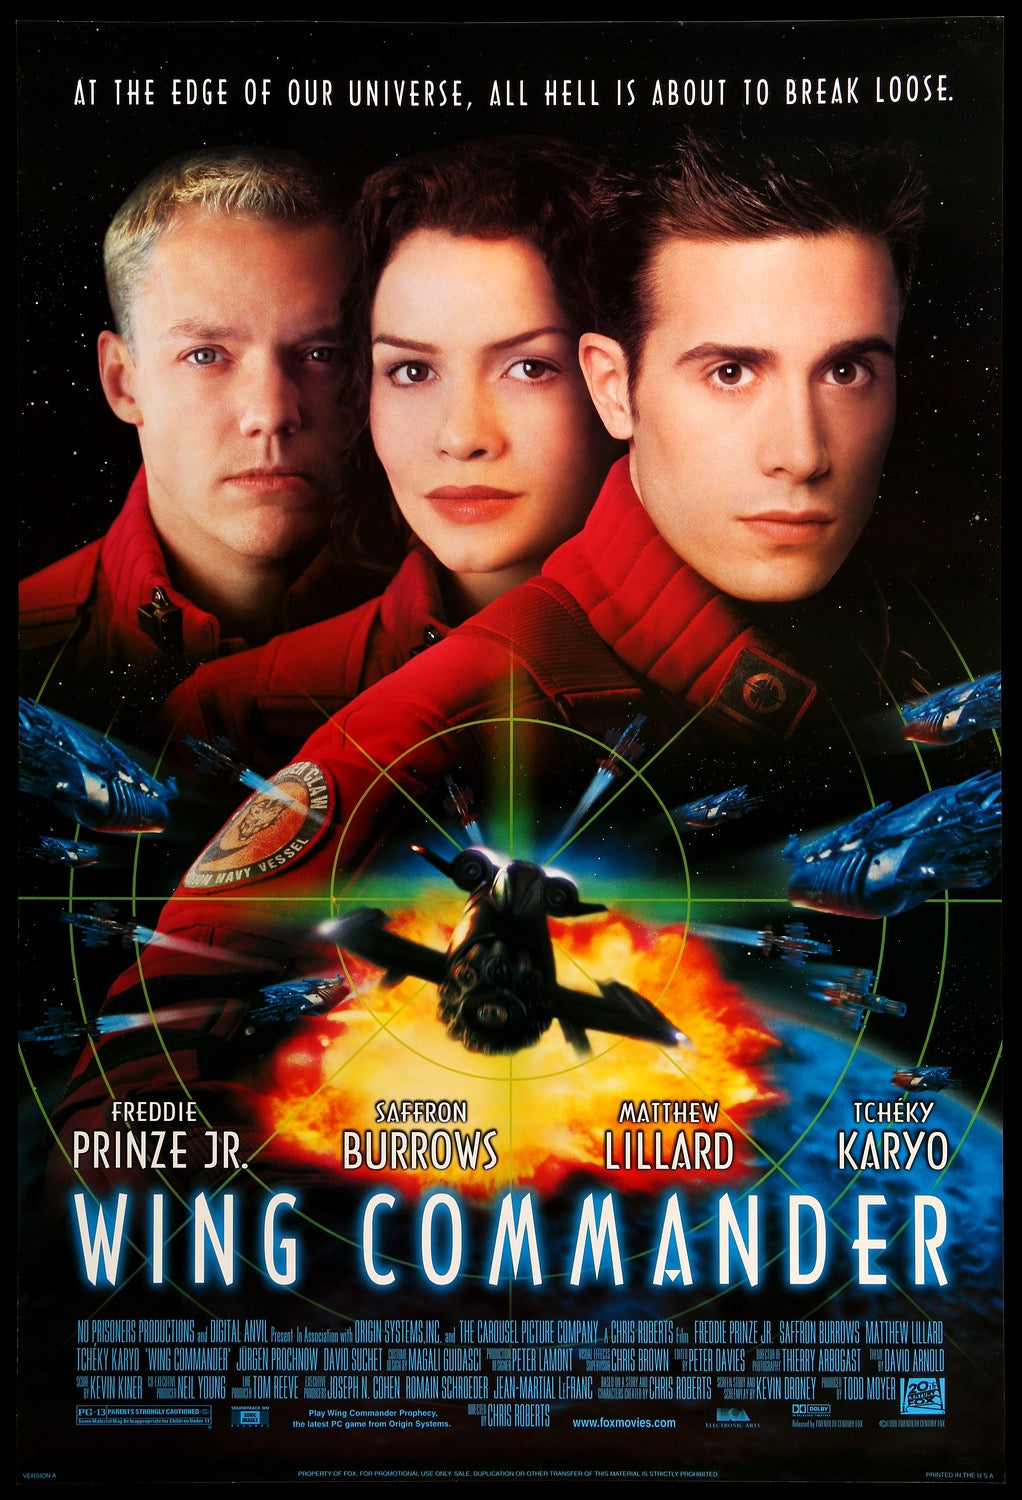 Wing Commander (1999) original movie poster for sale at Original Film Art